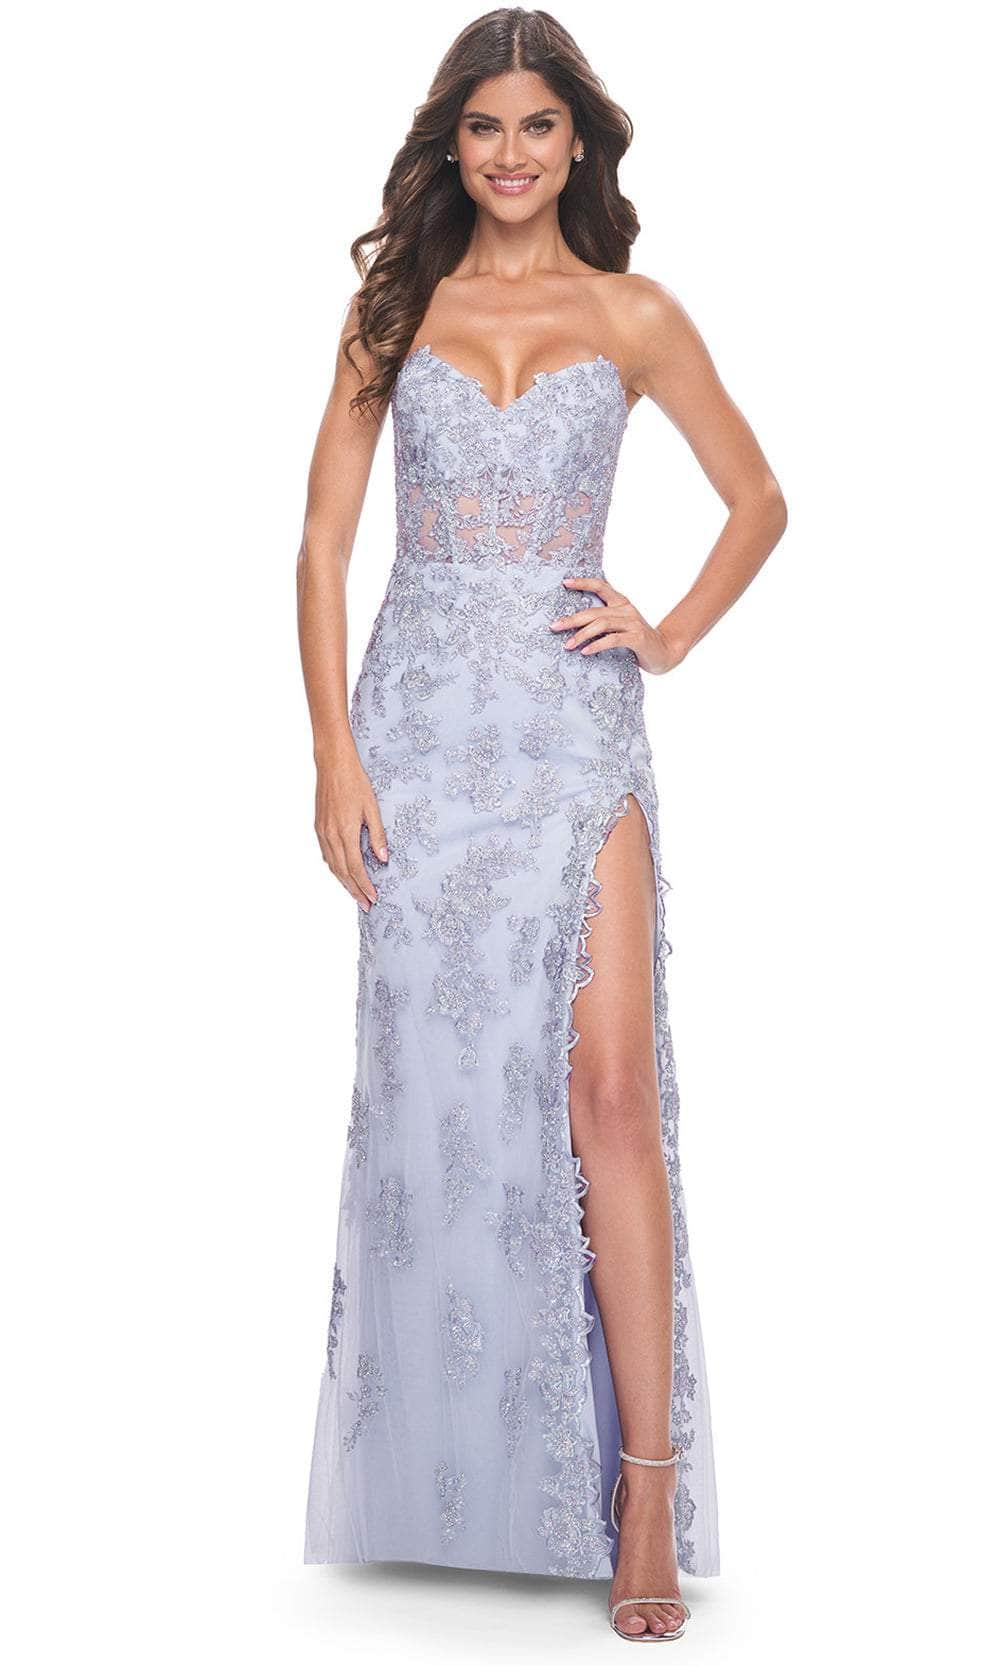 La Femme 32013 - Sweetheart Lace Prom Dress Prom Dresses 00 / Light Periwinkle